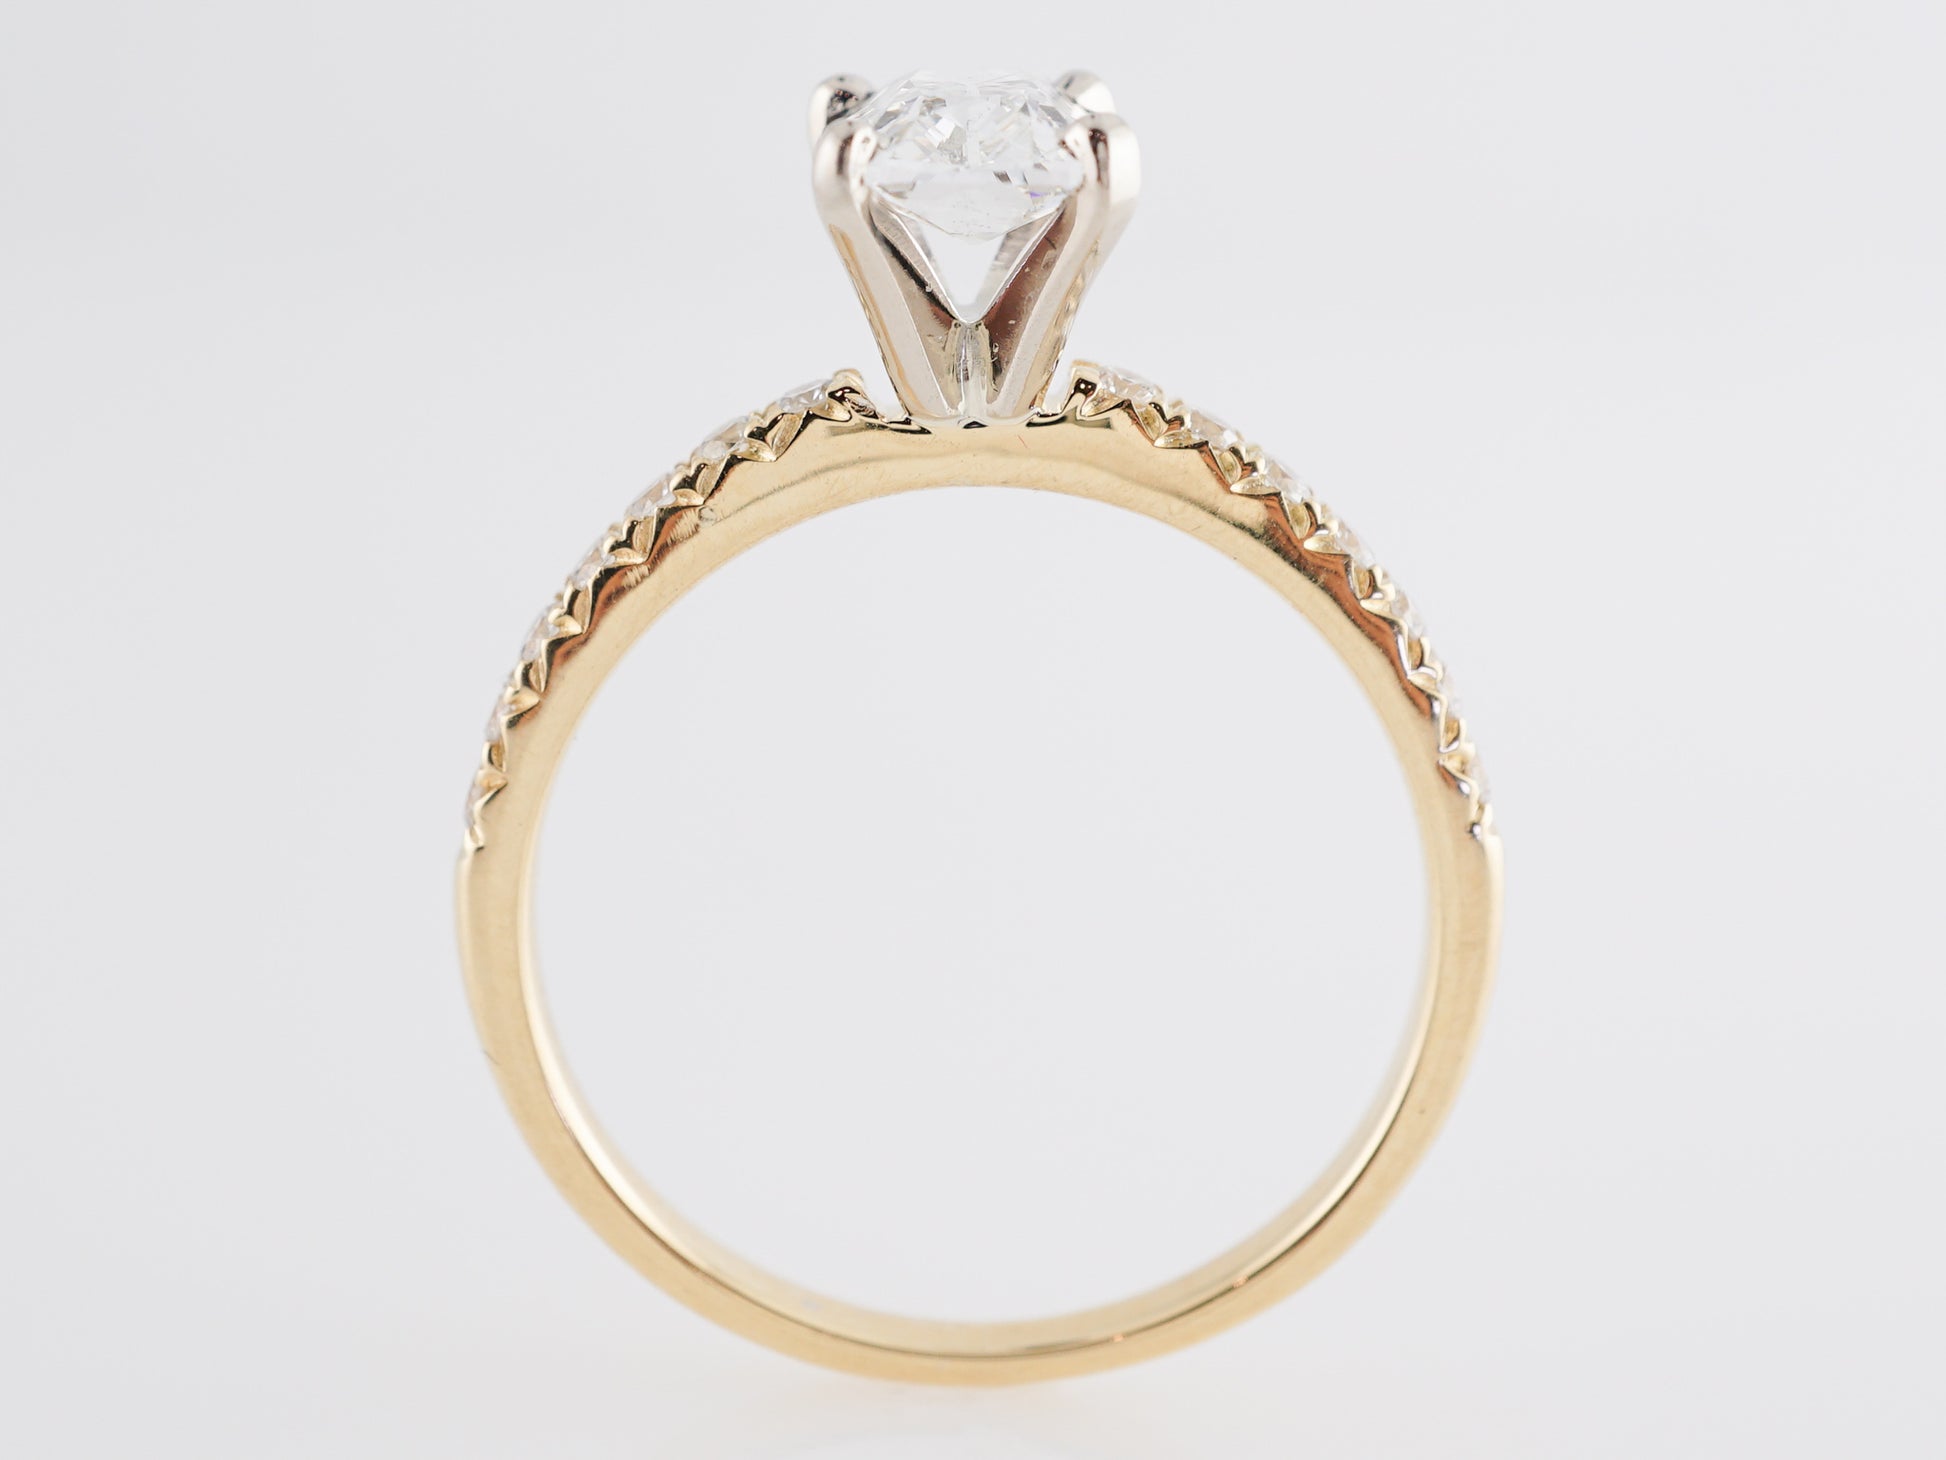 .99 Cushion Cut Diamond Engagement Ring in 14k Gold